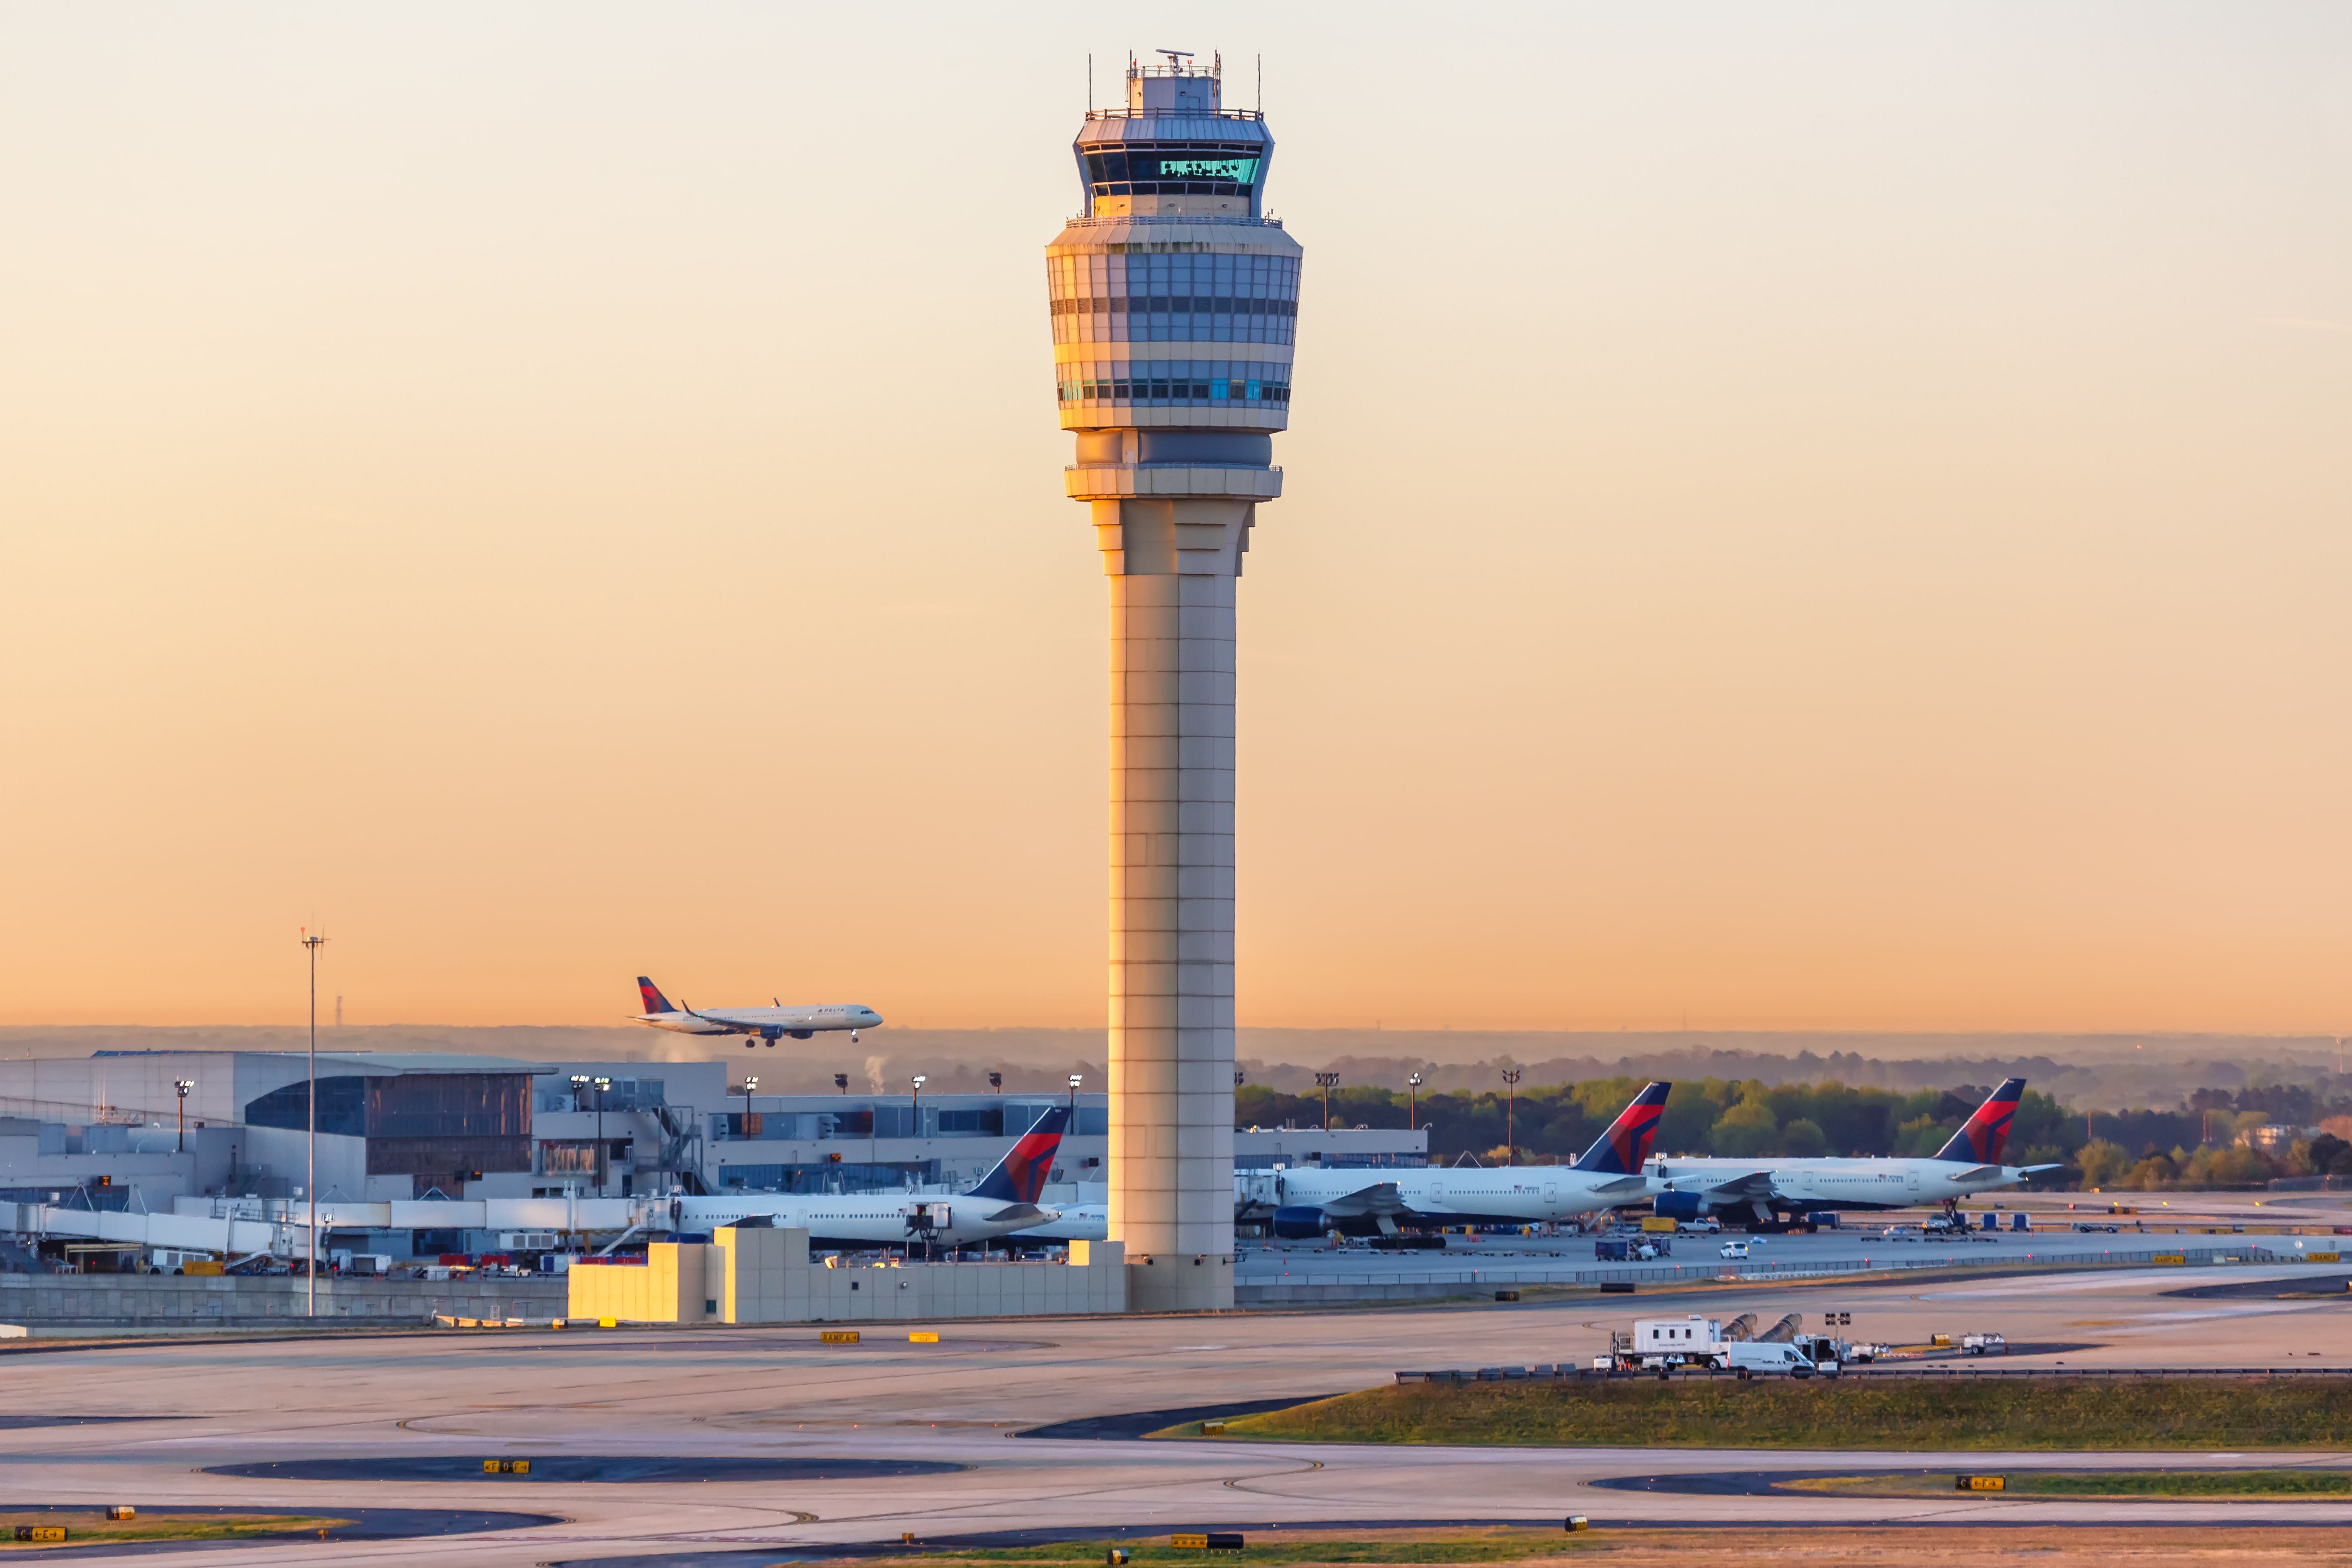 A Panoramic view of Hartsfield-Jackson Atlanta International Airport at Sunset.